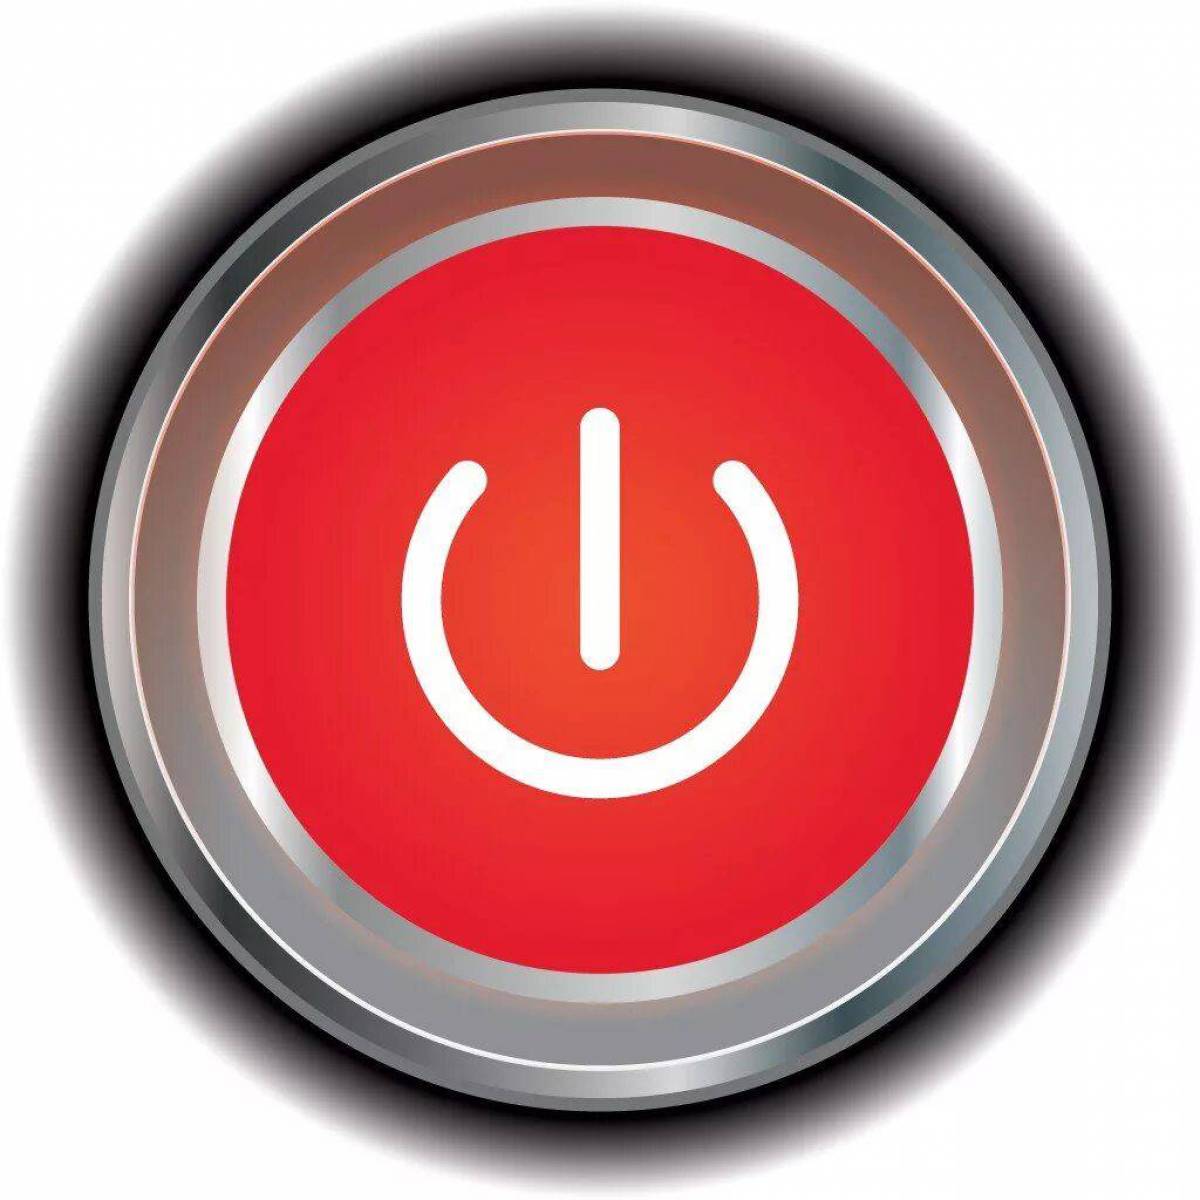 Кнопка 1 на сайт. Красная кнопка. Изображение кнопки. Значок кнопки. Кнопка включения и выключения.